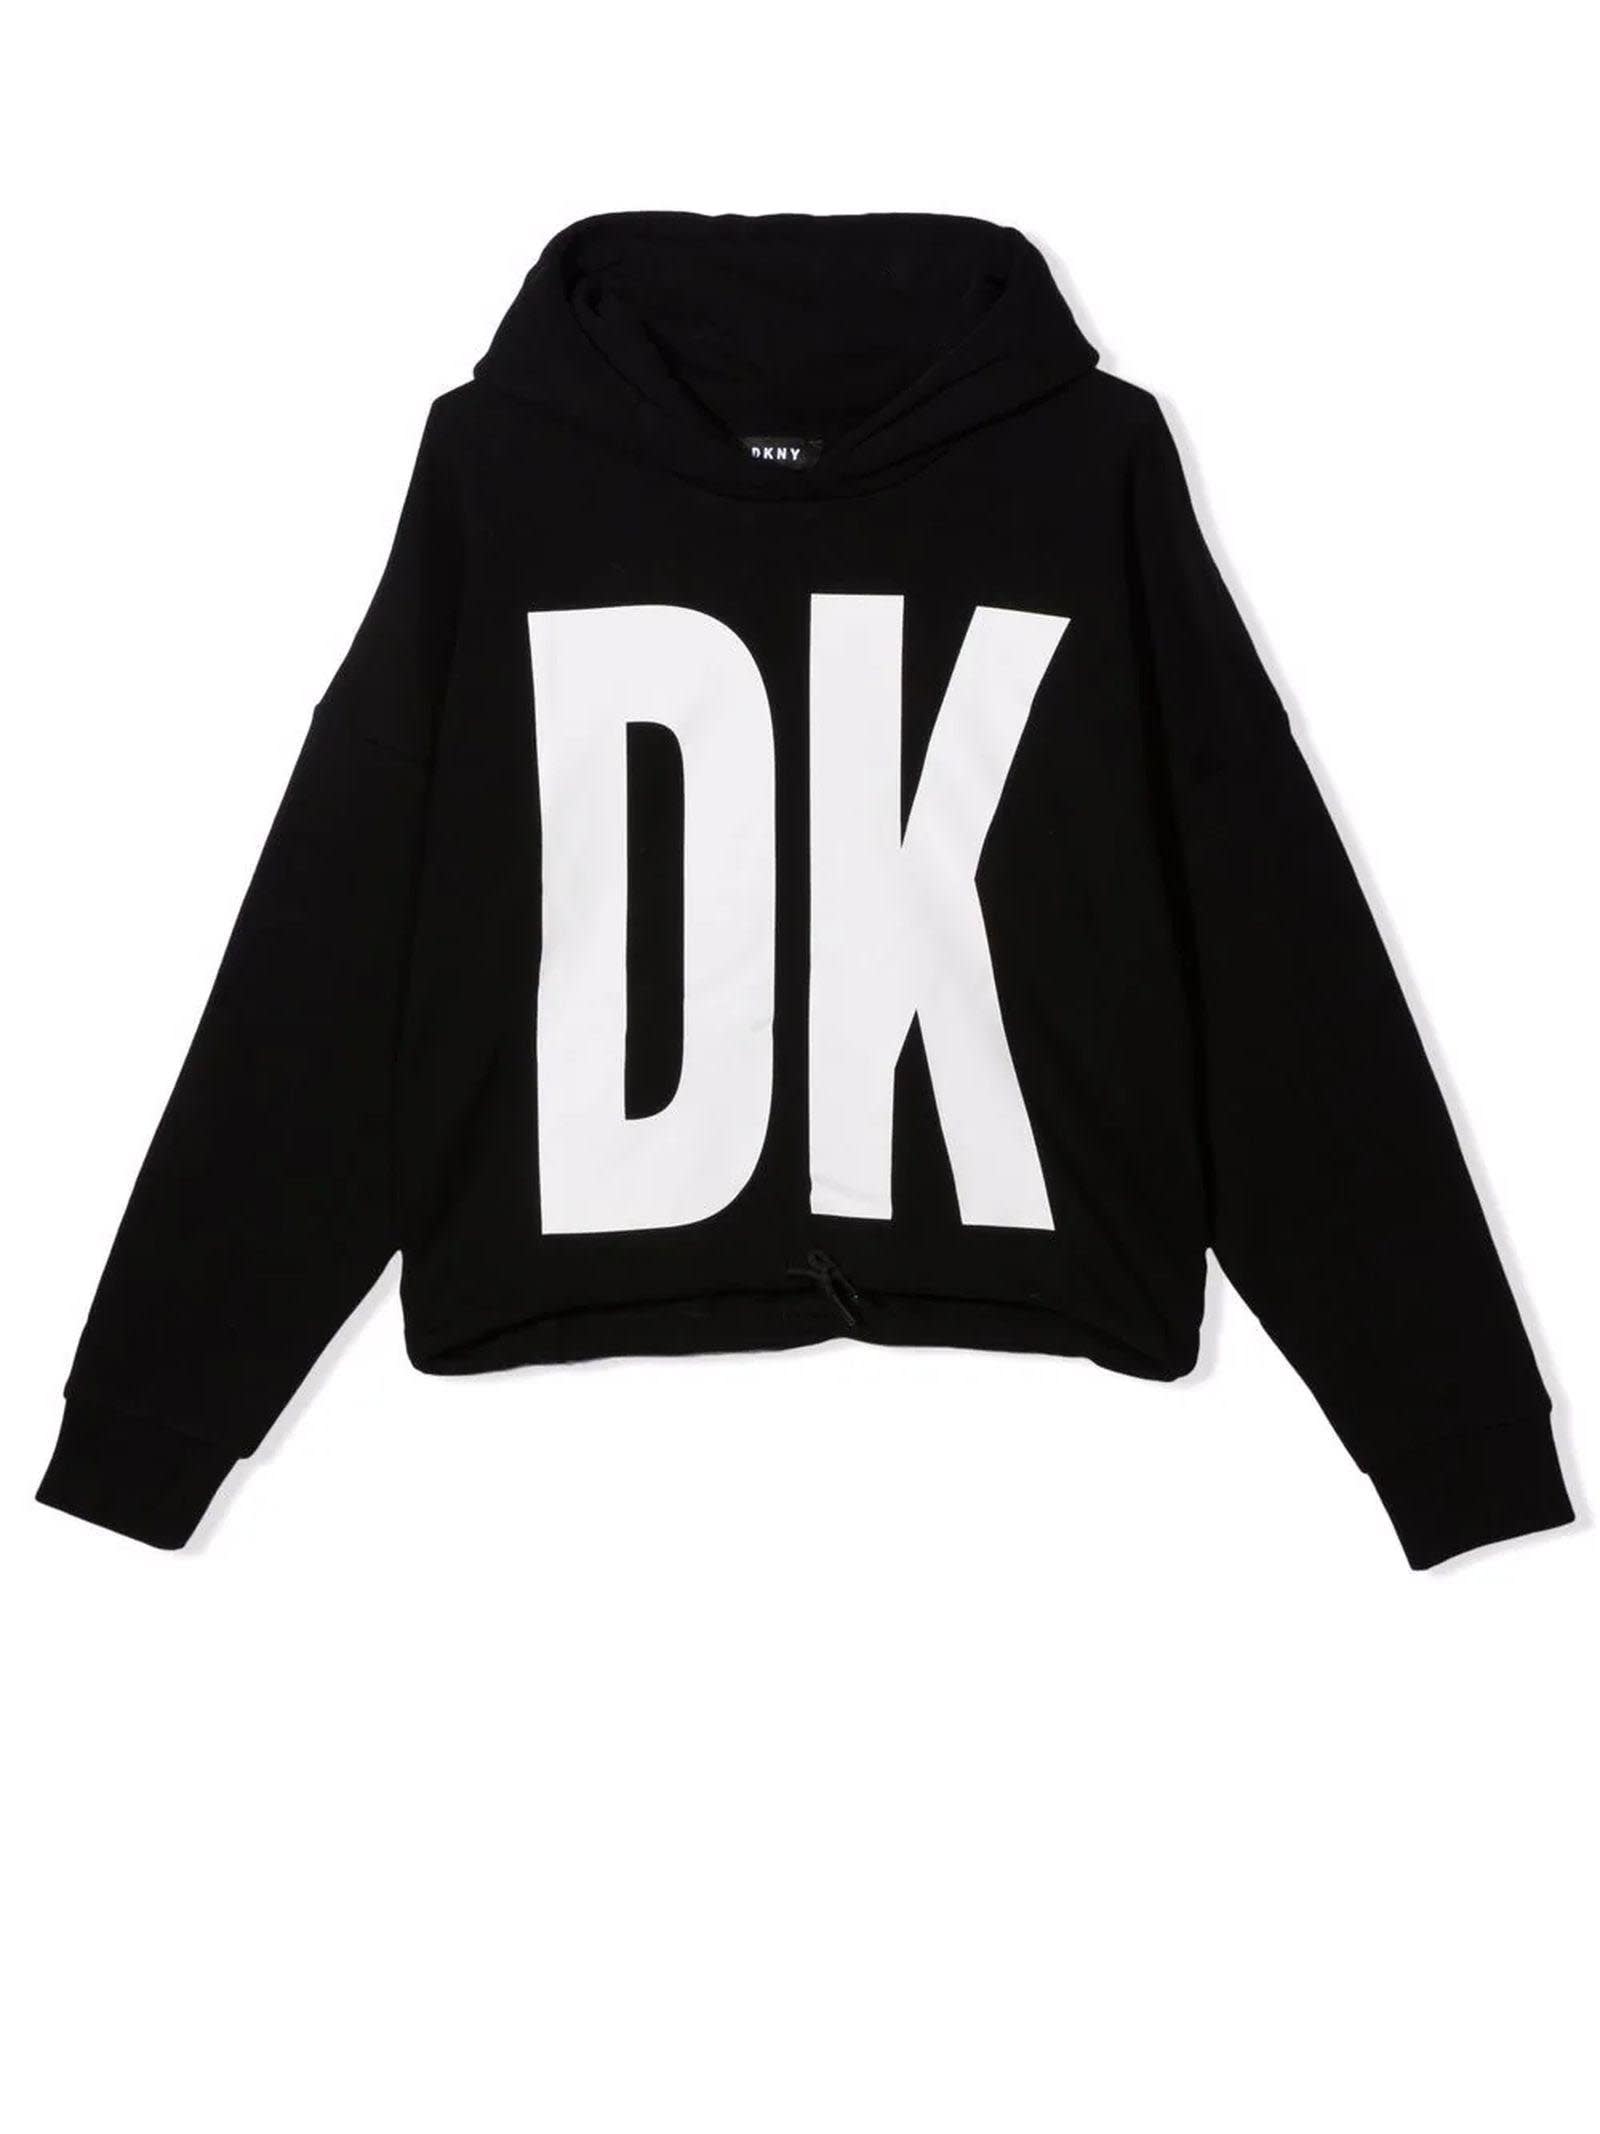 DKNY Black Cotton Hoodie